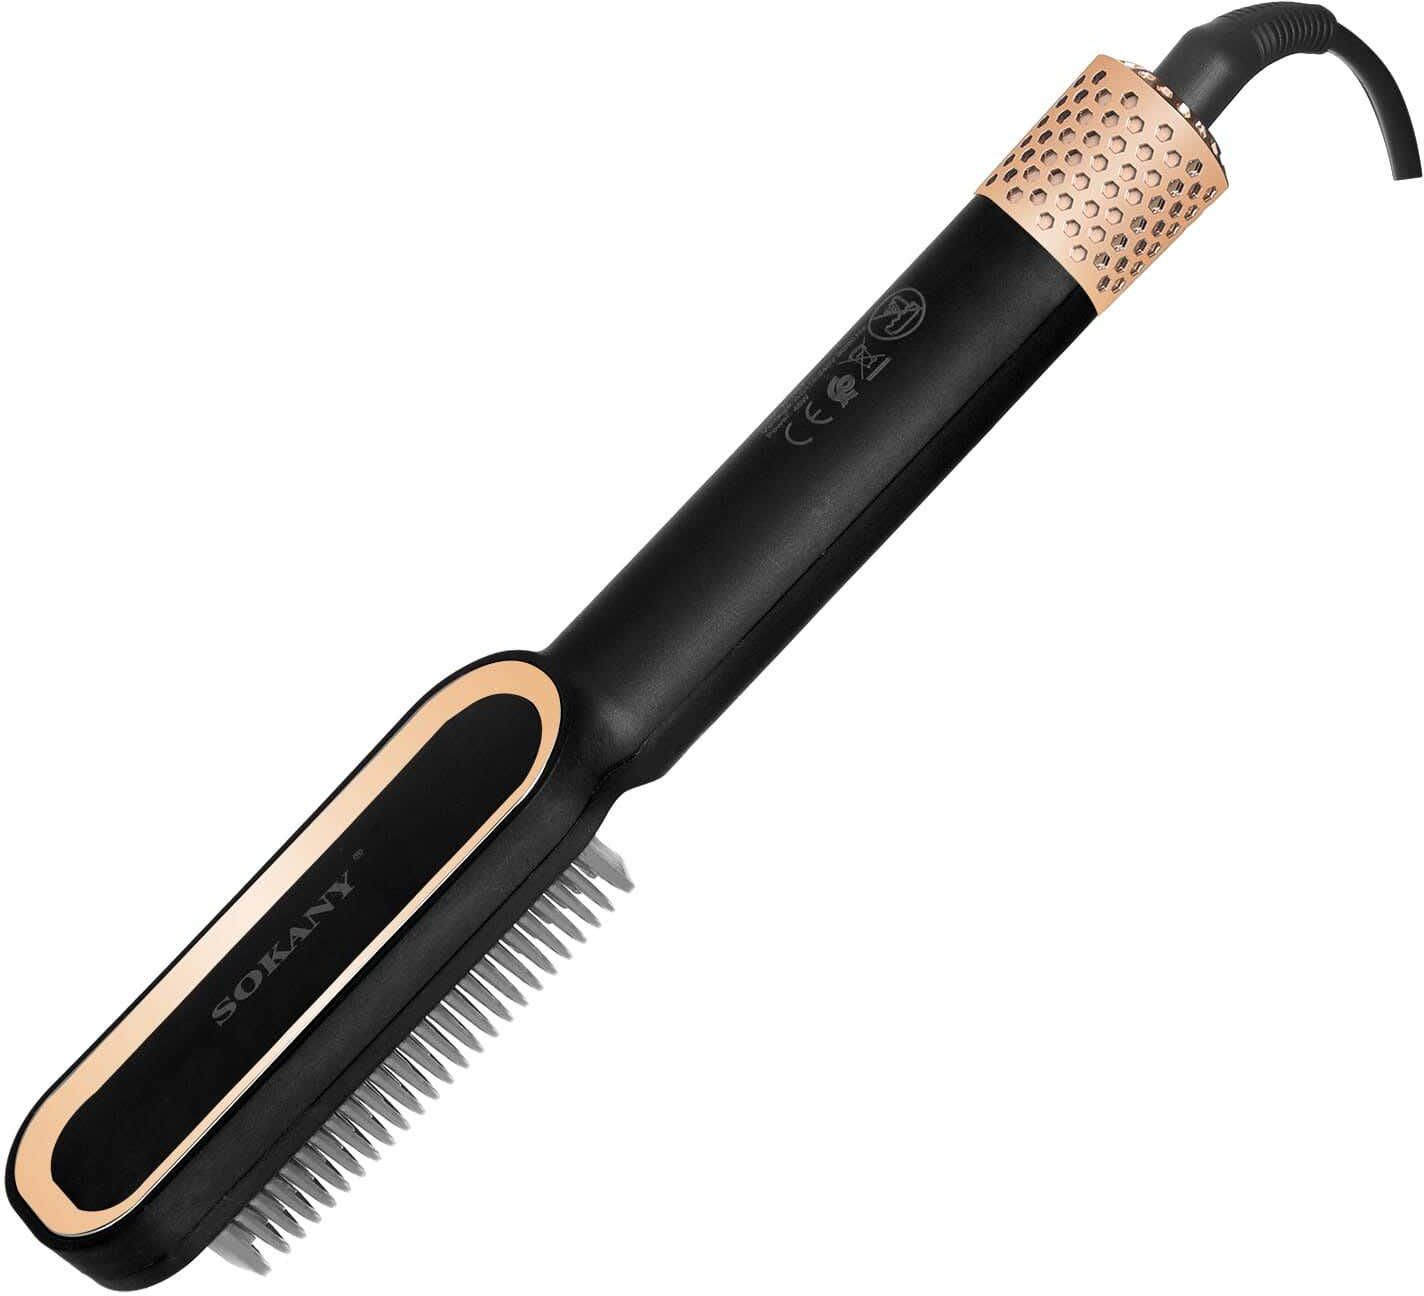 Get Sokany SK-1009 Electric Hair Brush, 45 Watt - Black with best offers | Raneen.com